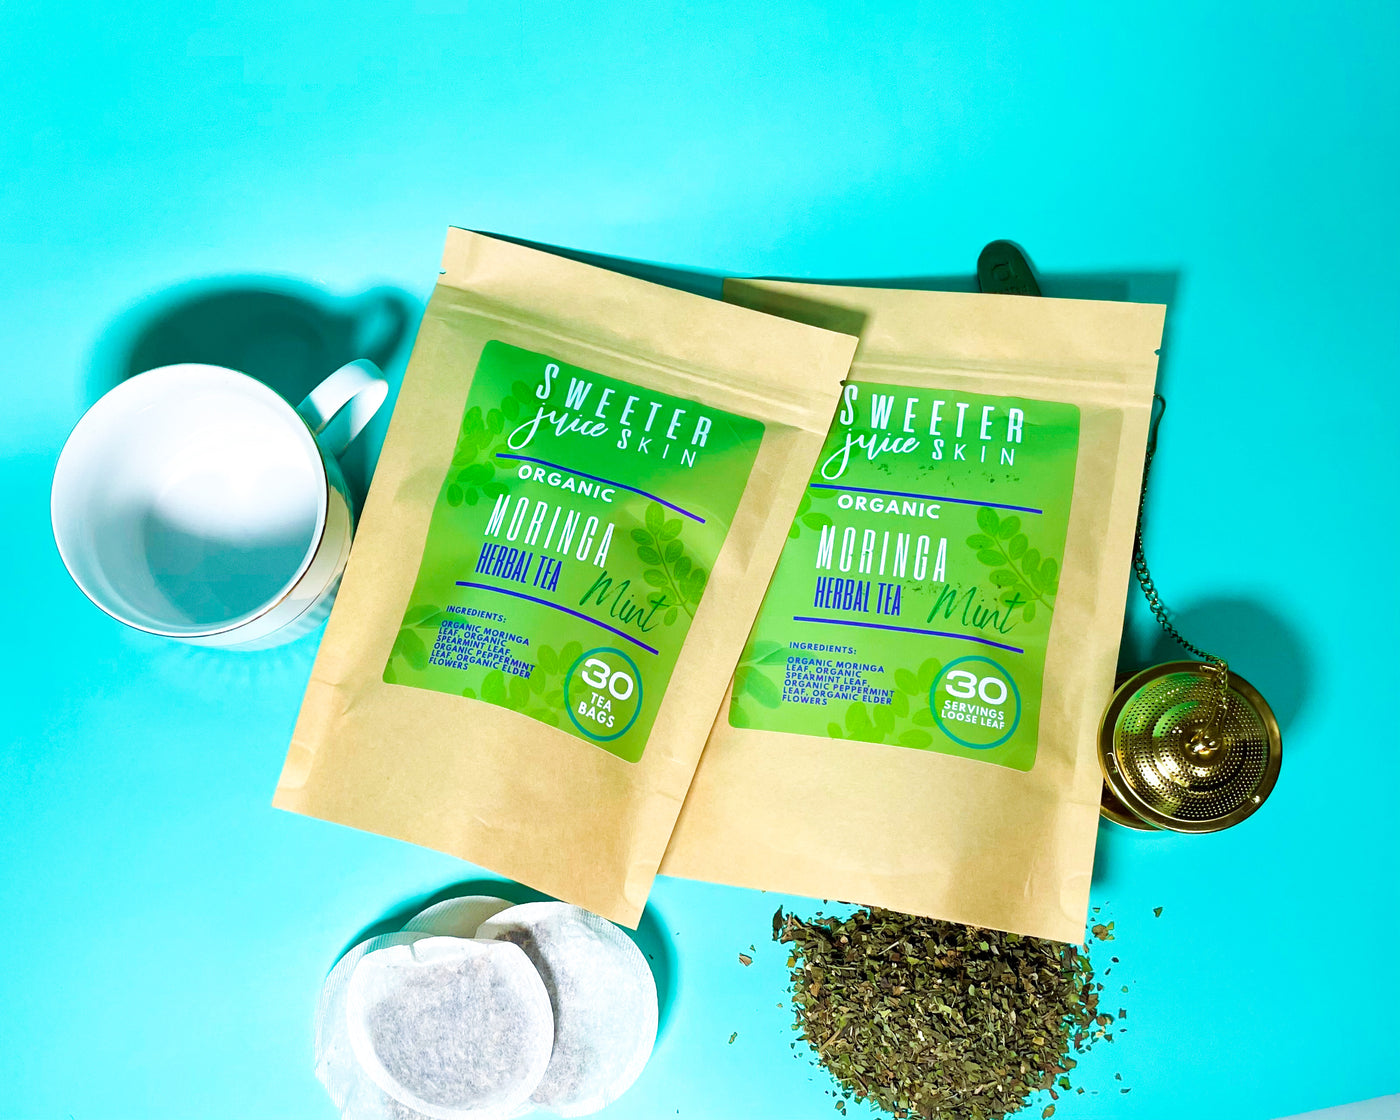 Moringa Miracle Mint Herbal Tea - Sweeter Juice Skin